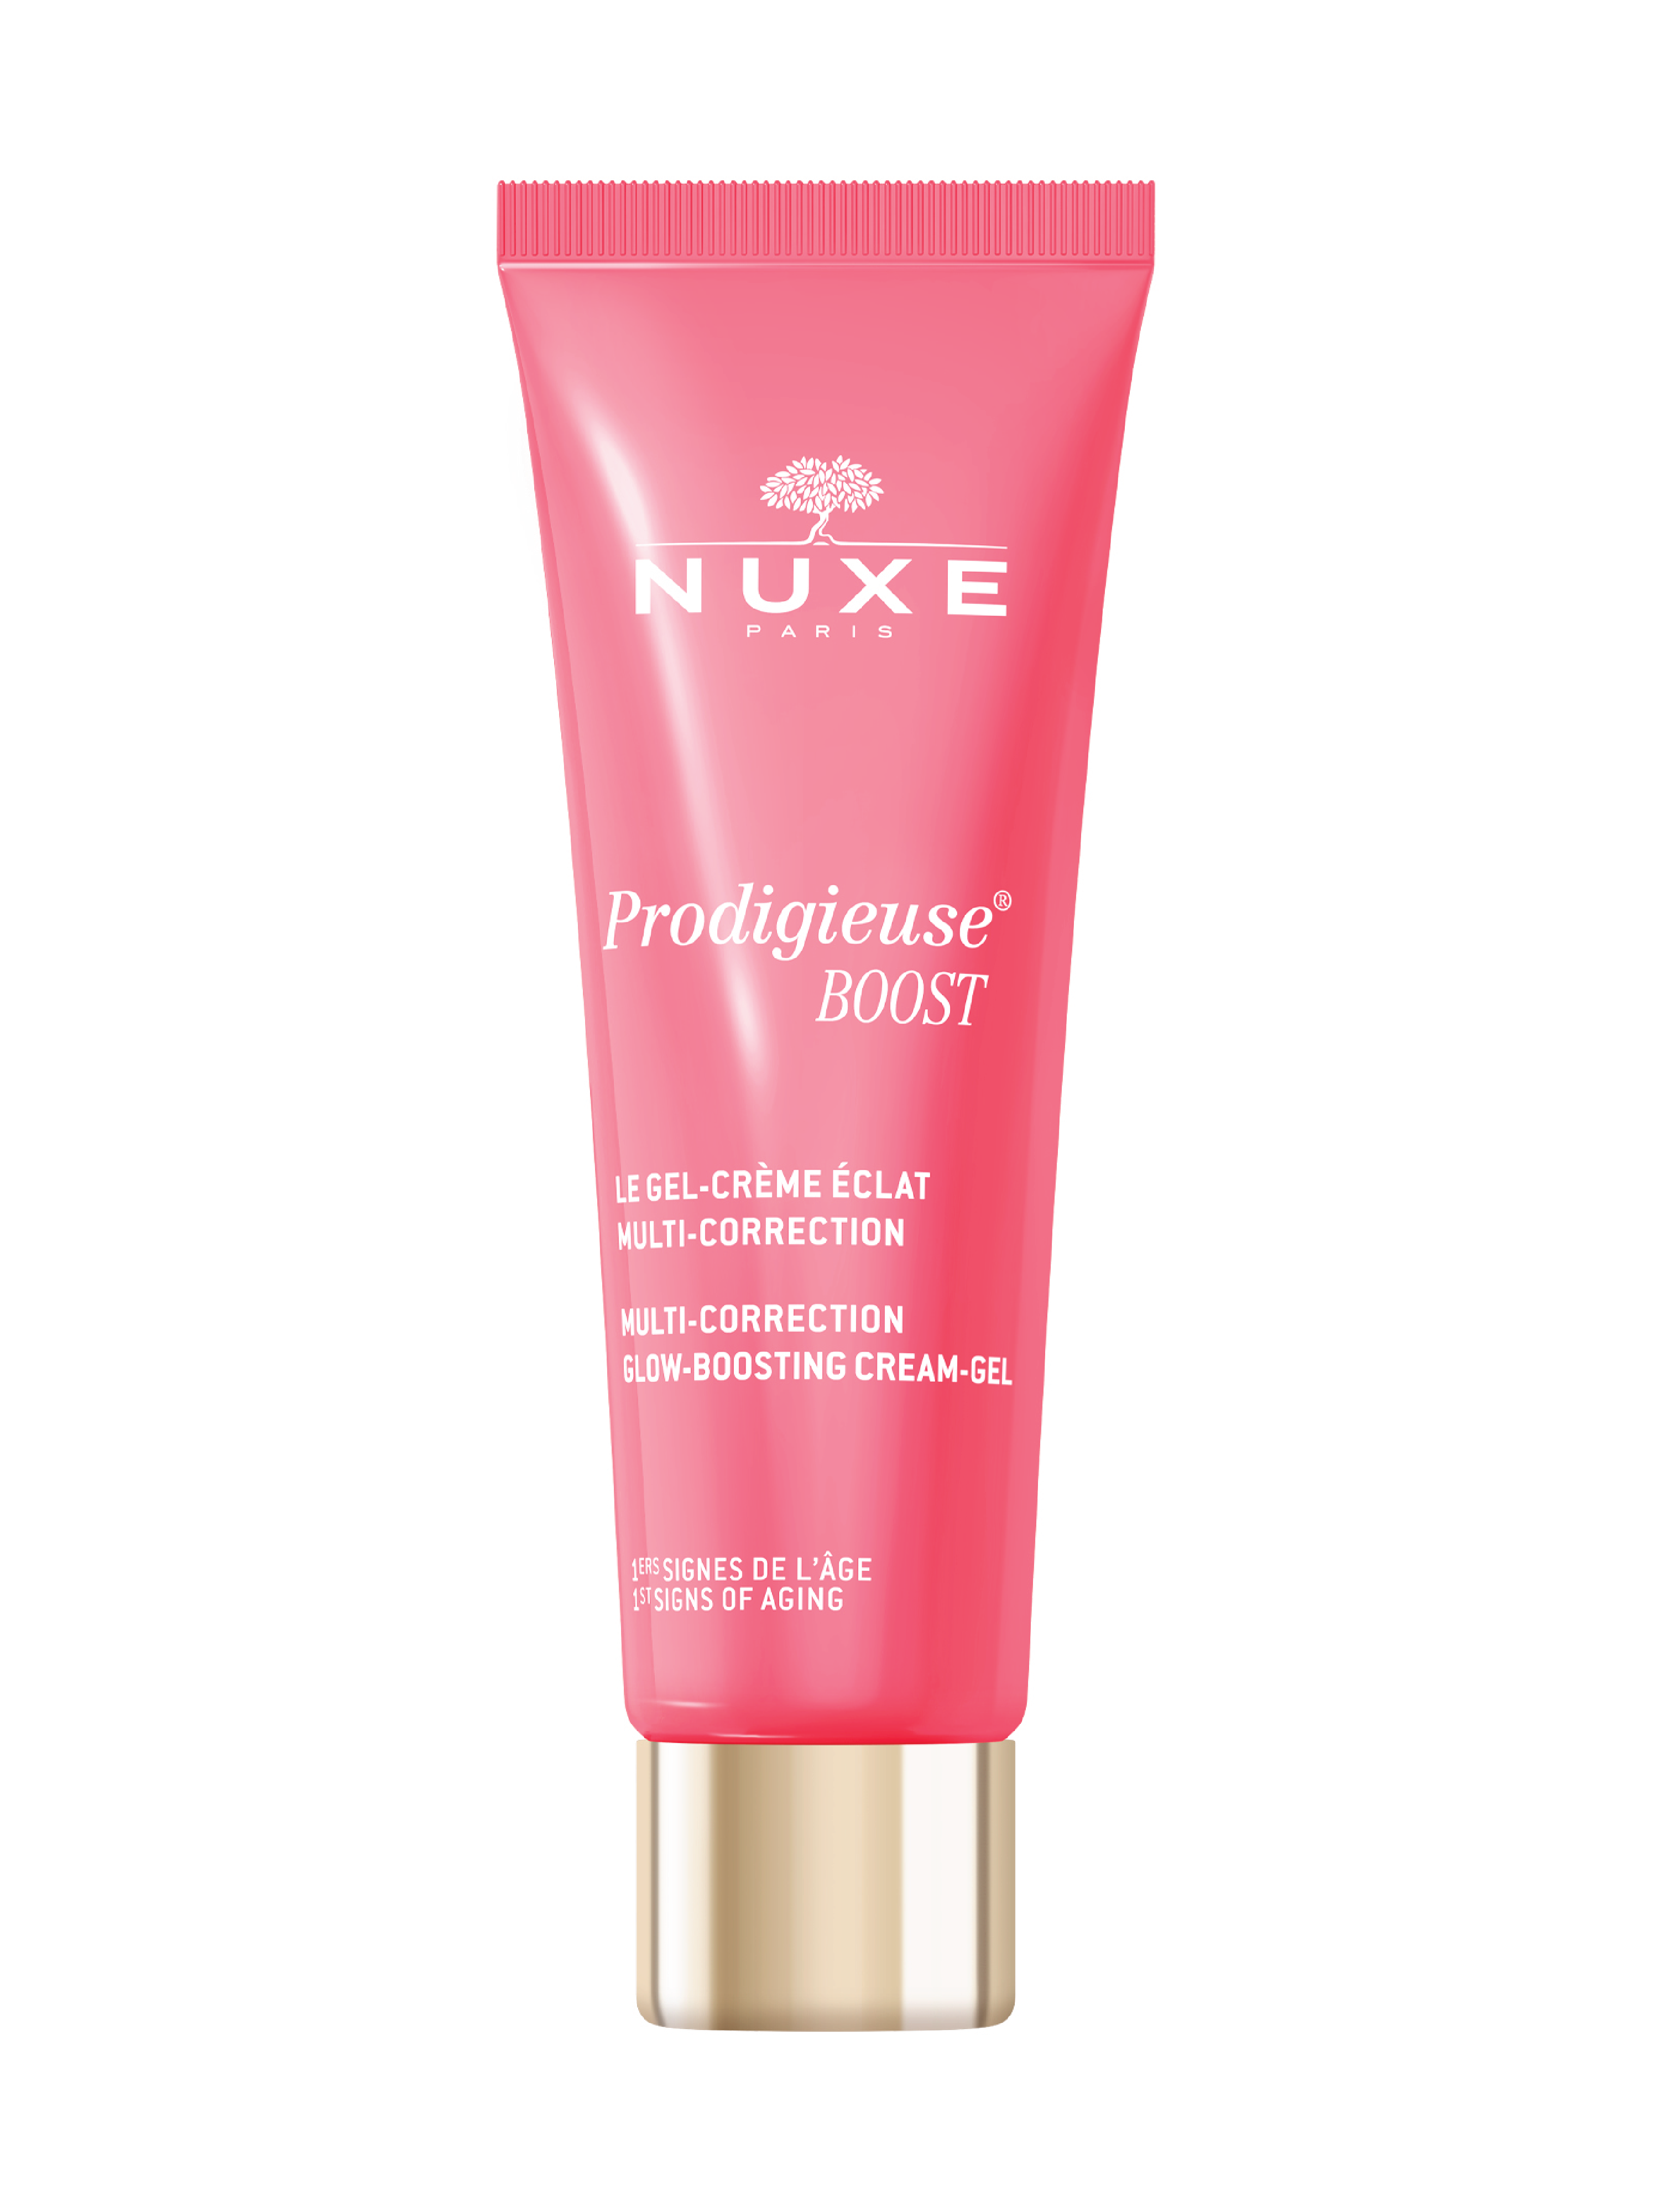 NUXE Prodigieuse Boost Multi-Correction Gel Cream, 40 ml